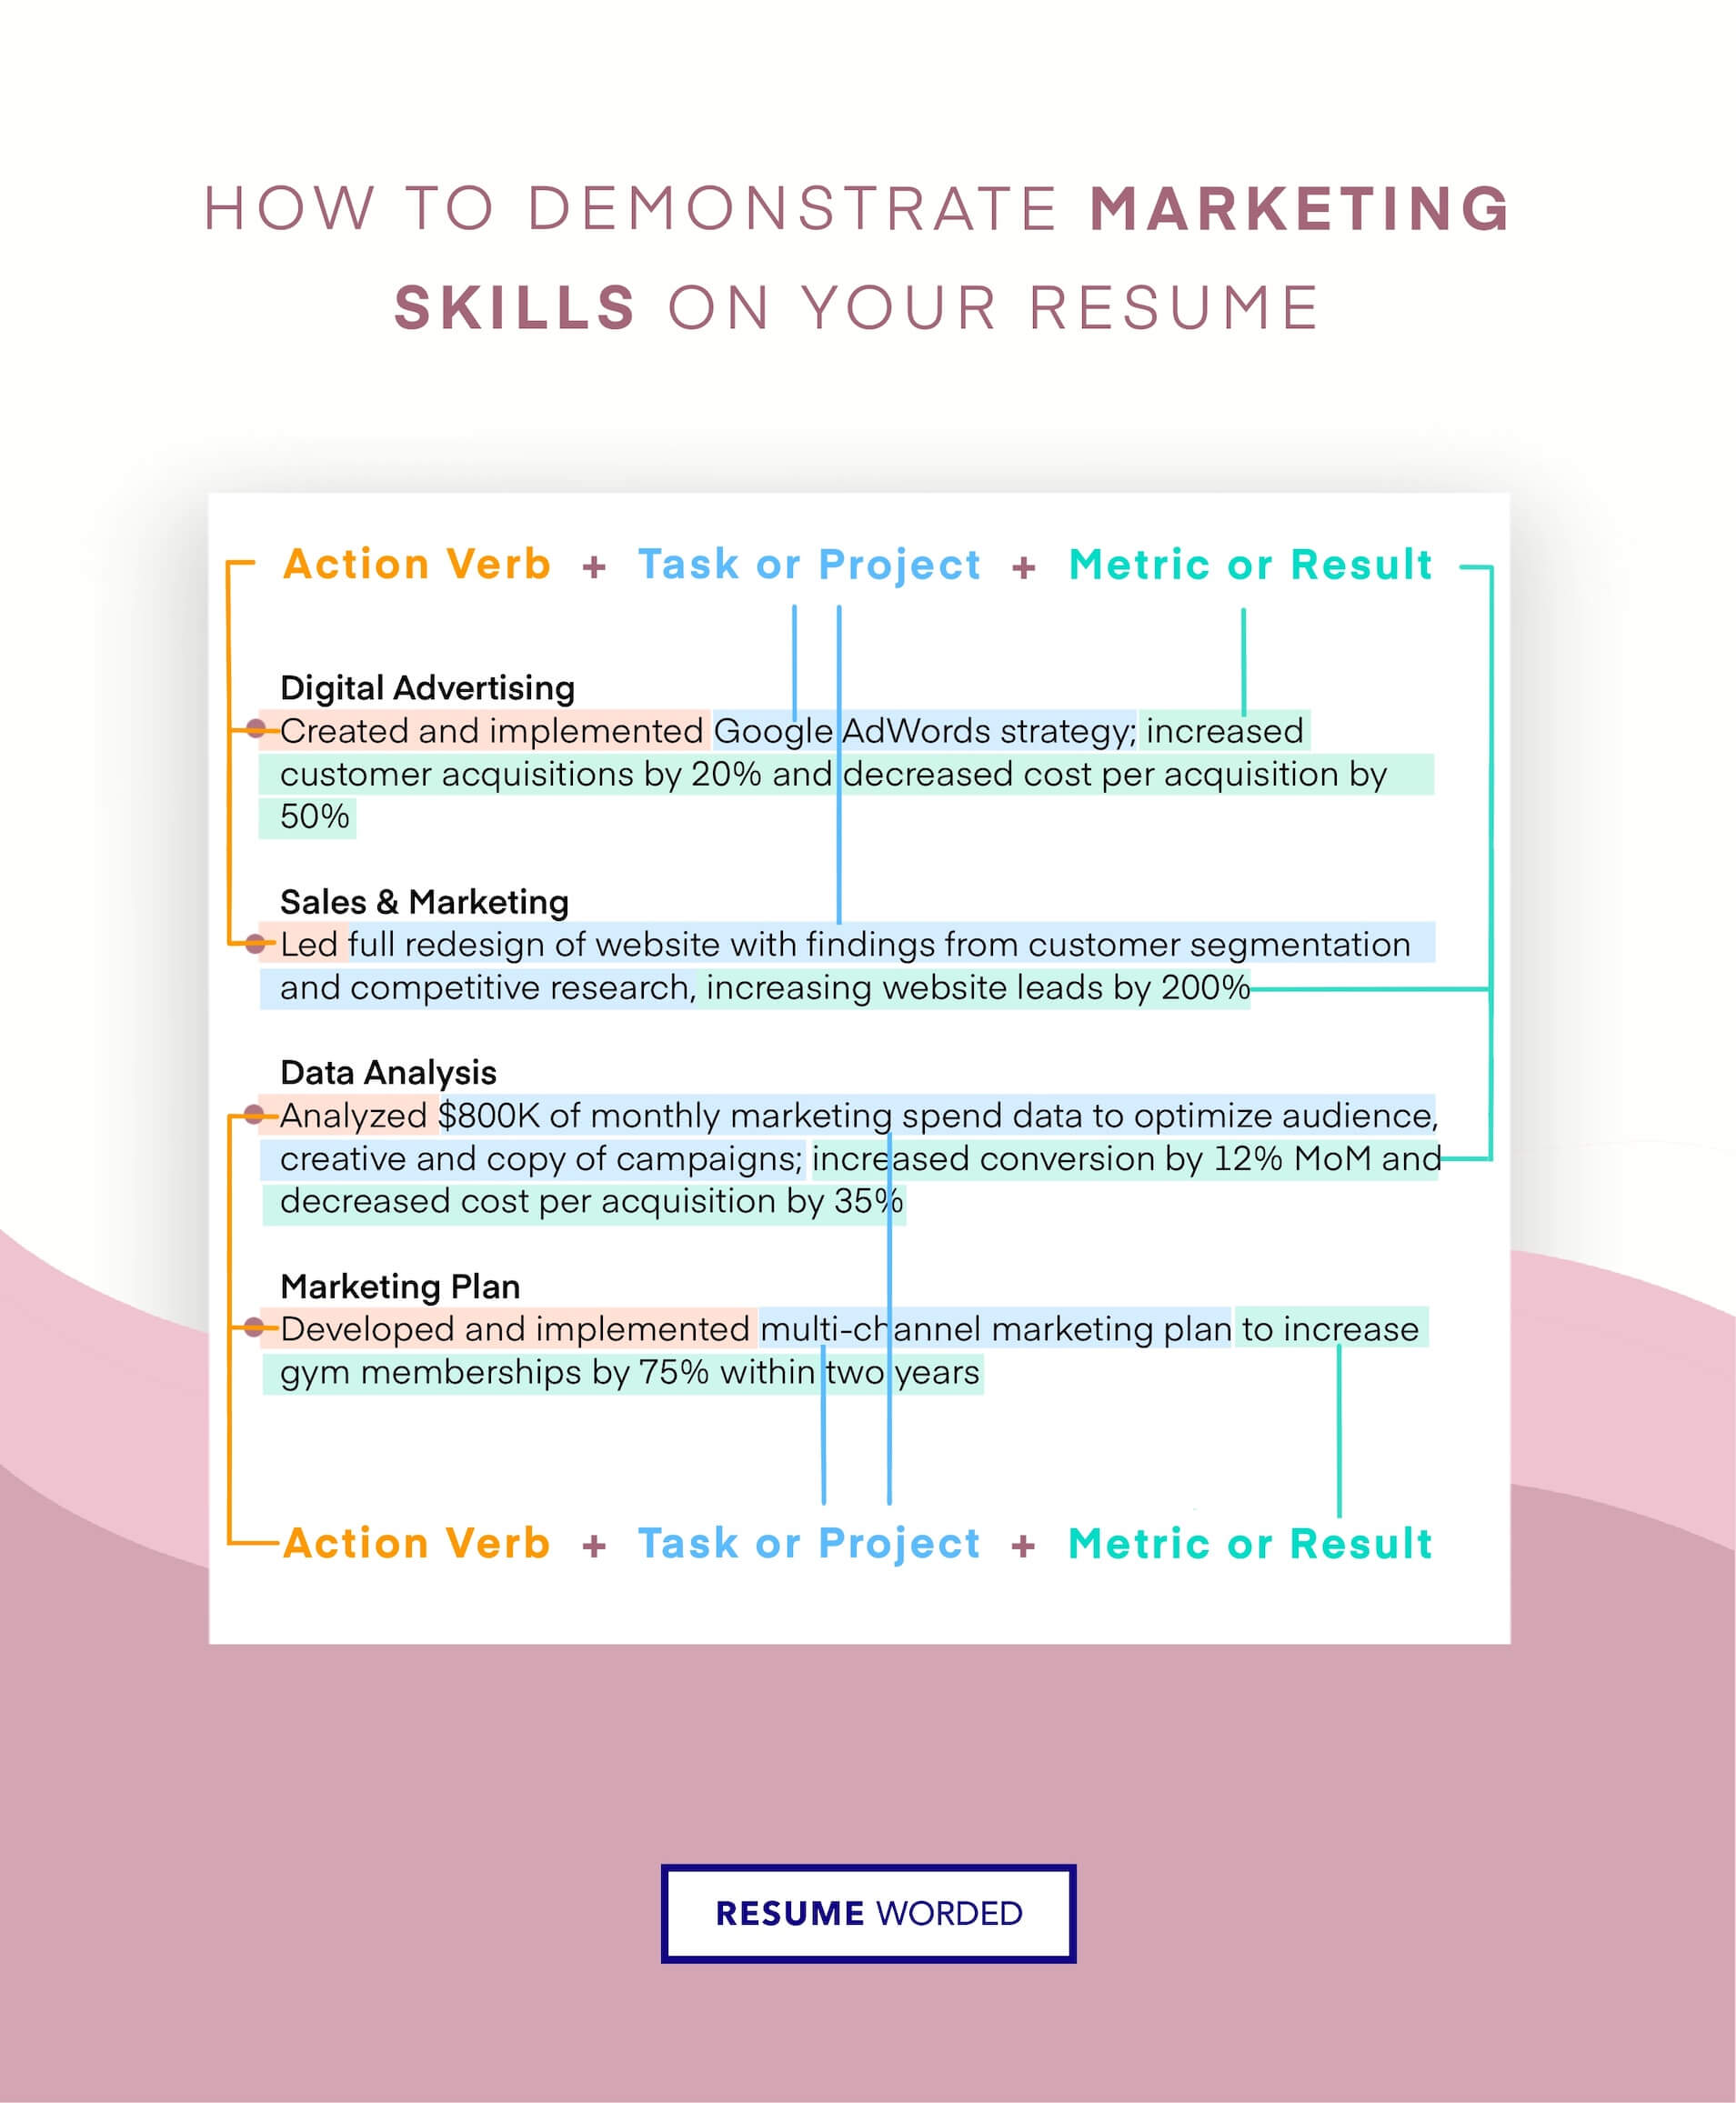 Show expertise in digital marketing tools - Digital Marketing Manager CV